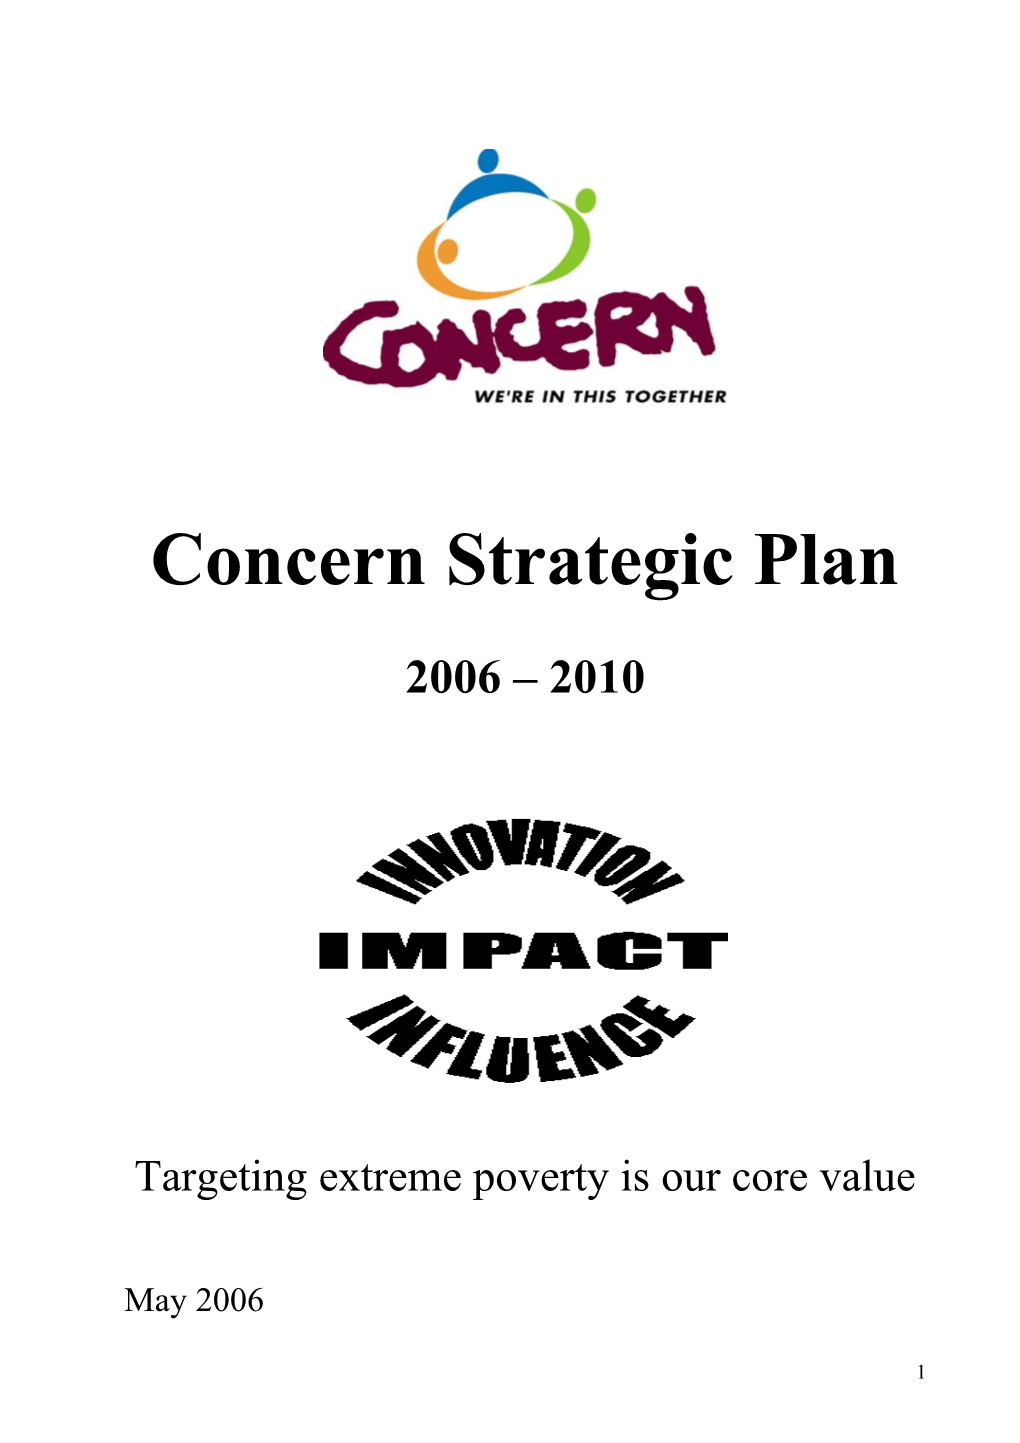 Concern Strategic Plan 2006-2010